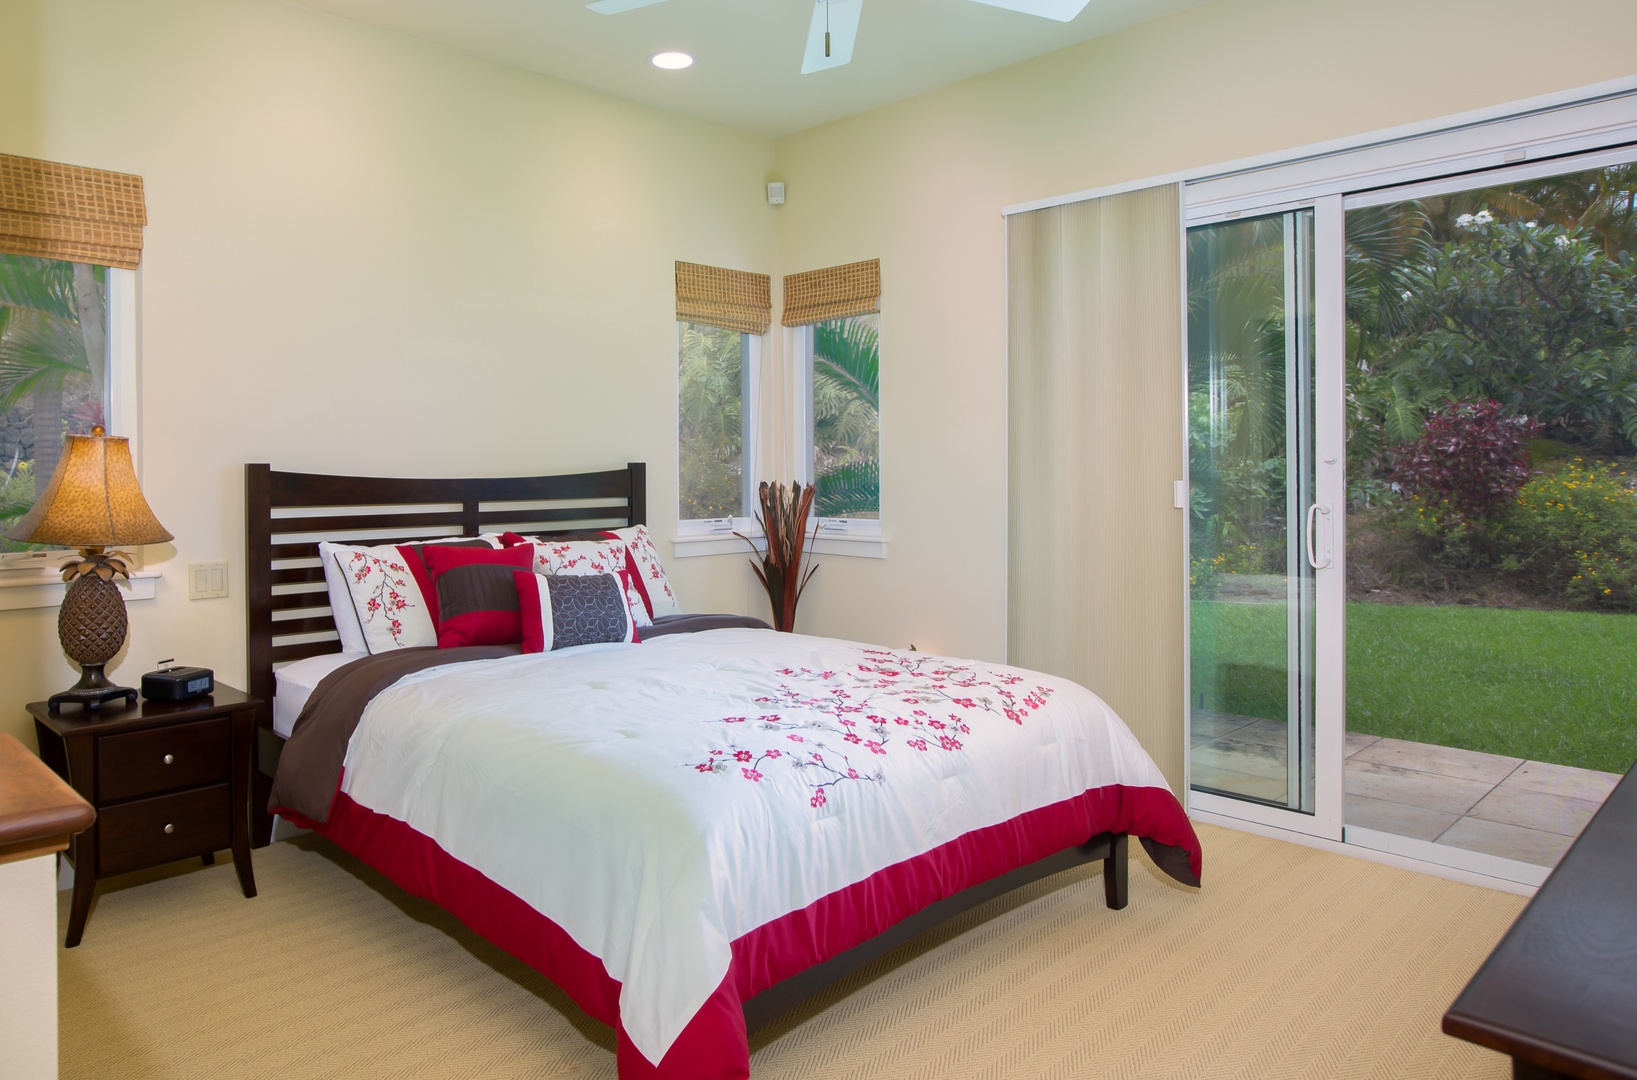 Kailua Kona Vacation Rentals, Hale Maluhia (Big Island) - Guest bedroom with king bed